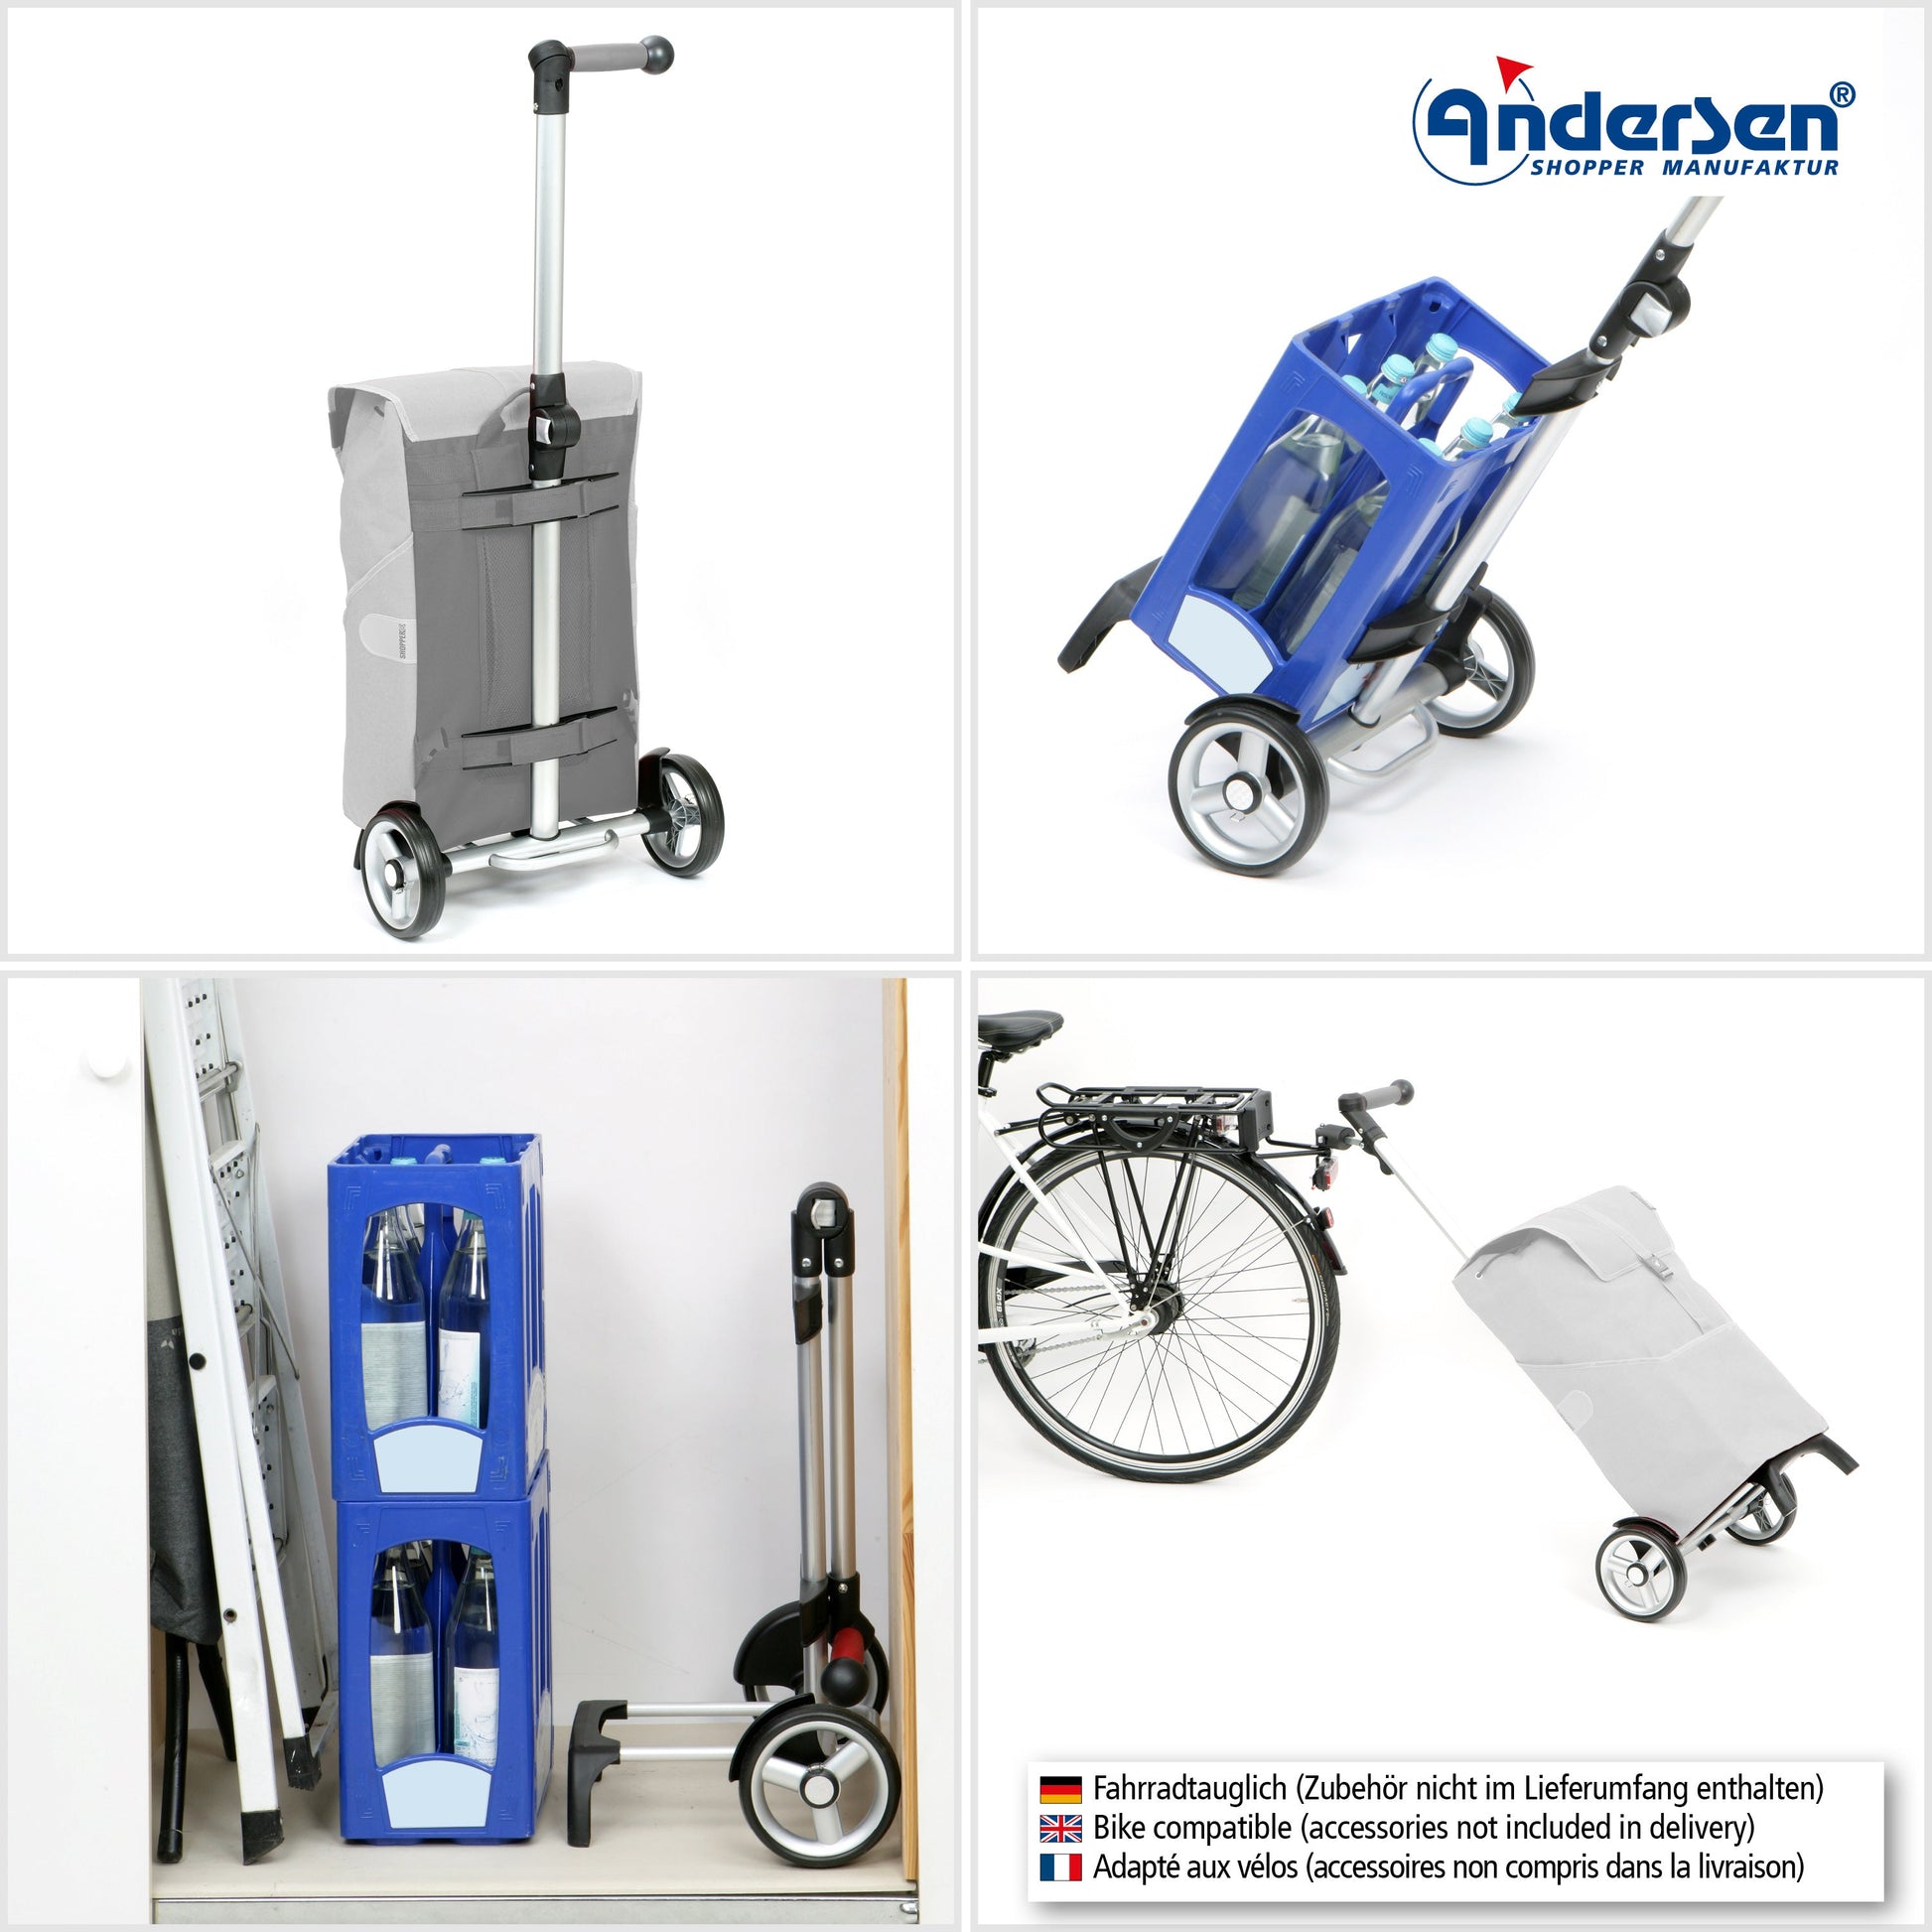 Andersen Shopper Manufaktur-Unus Shopper Fun Famke blau-www.shopping-trolley.ch-bild5